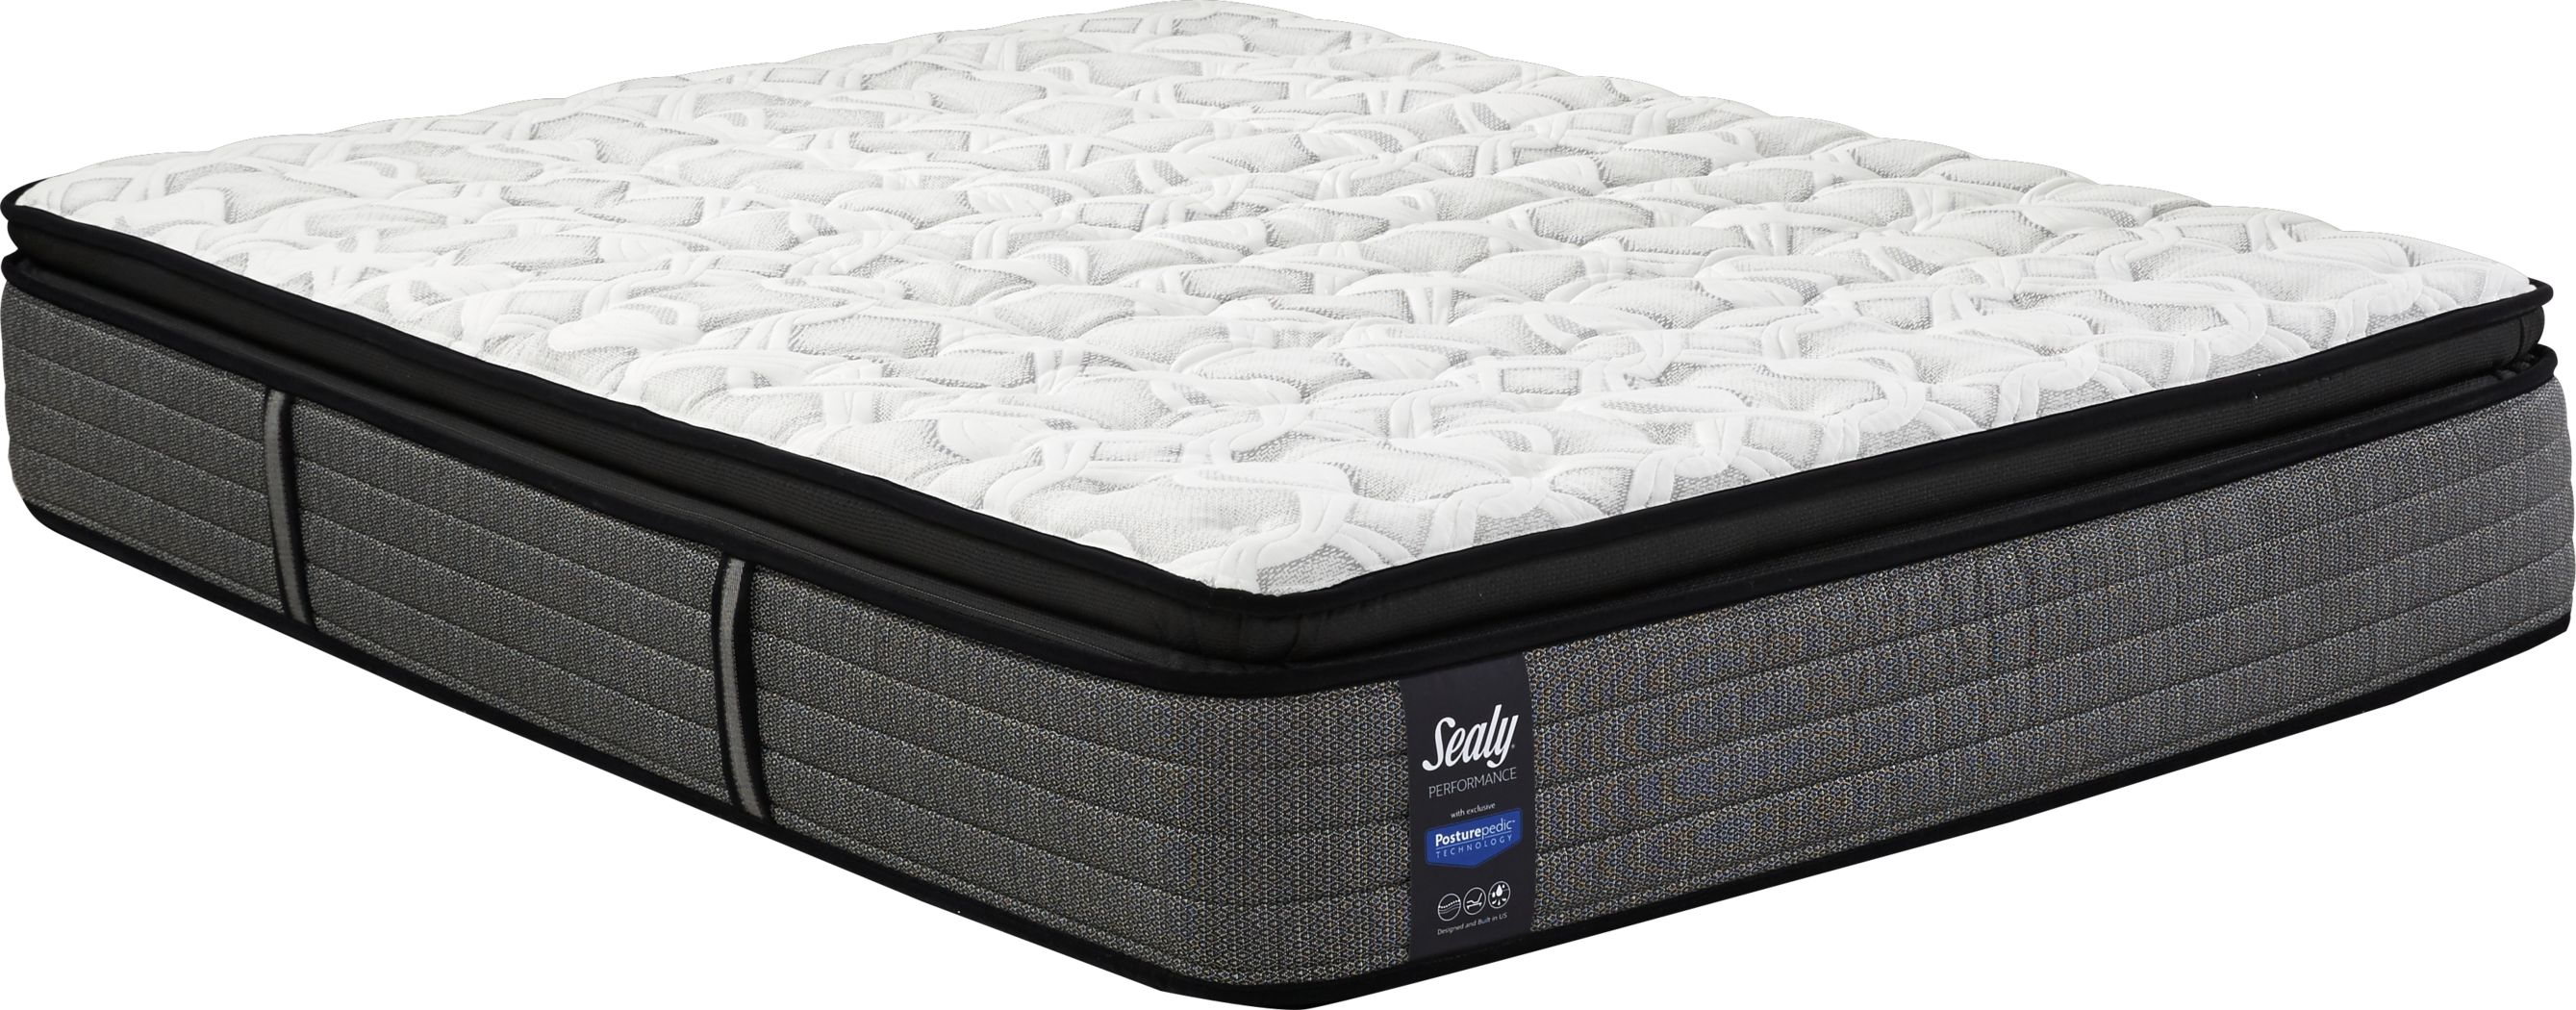 sealy euphoria queen mattress set review